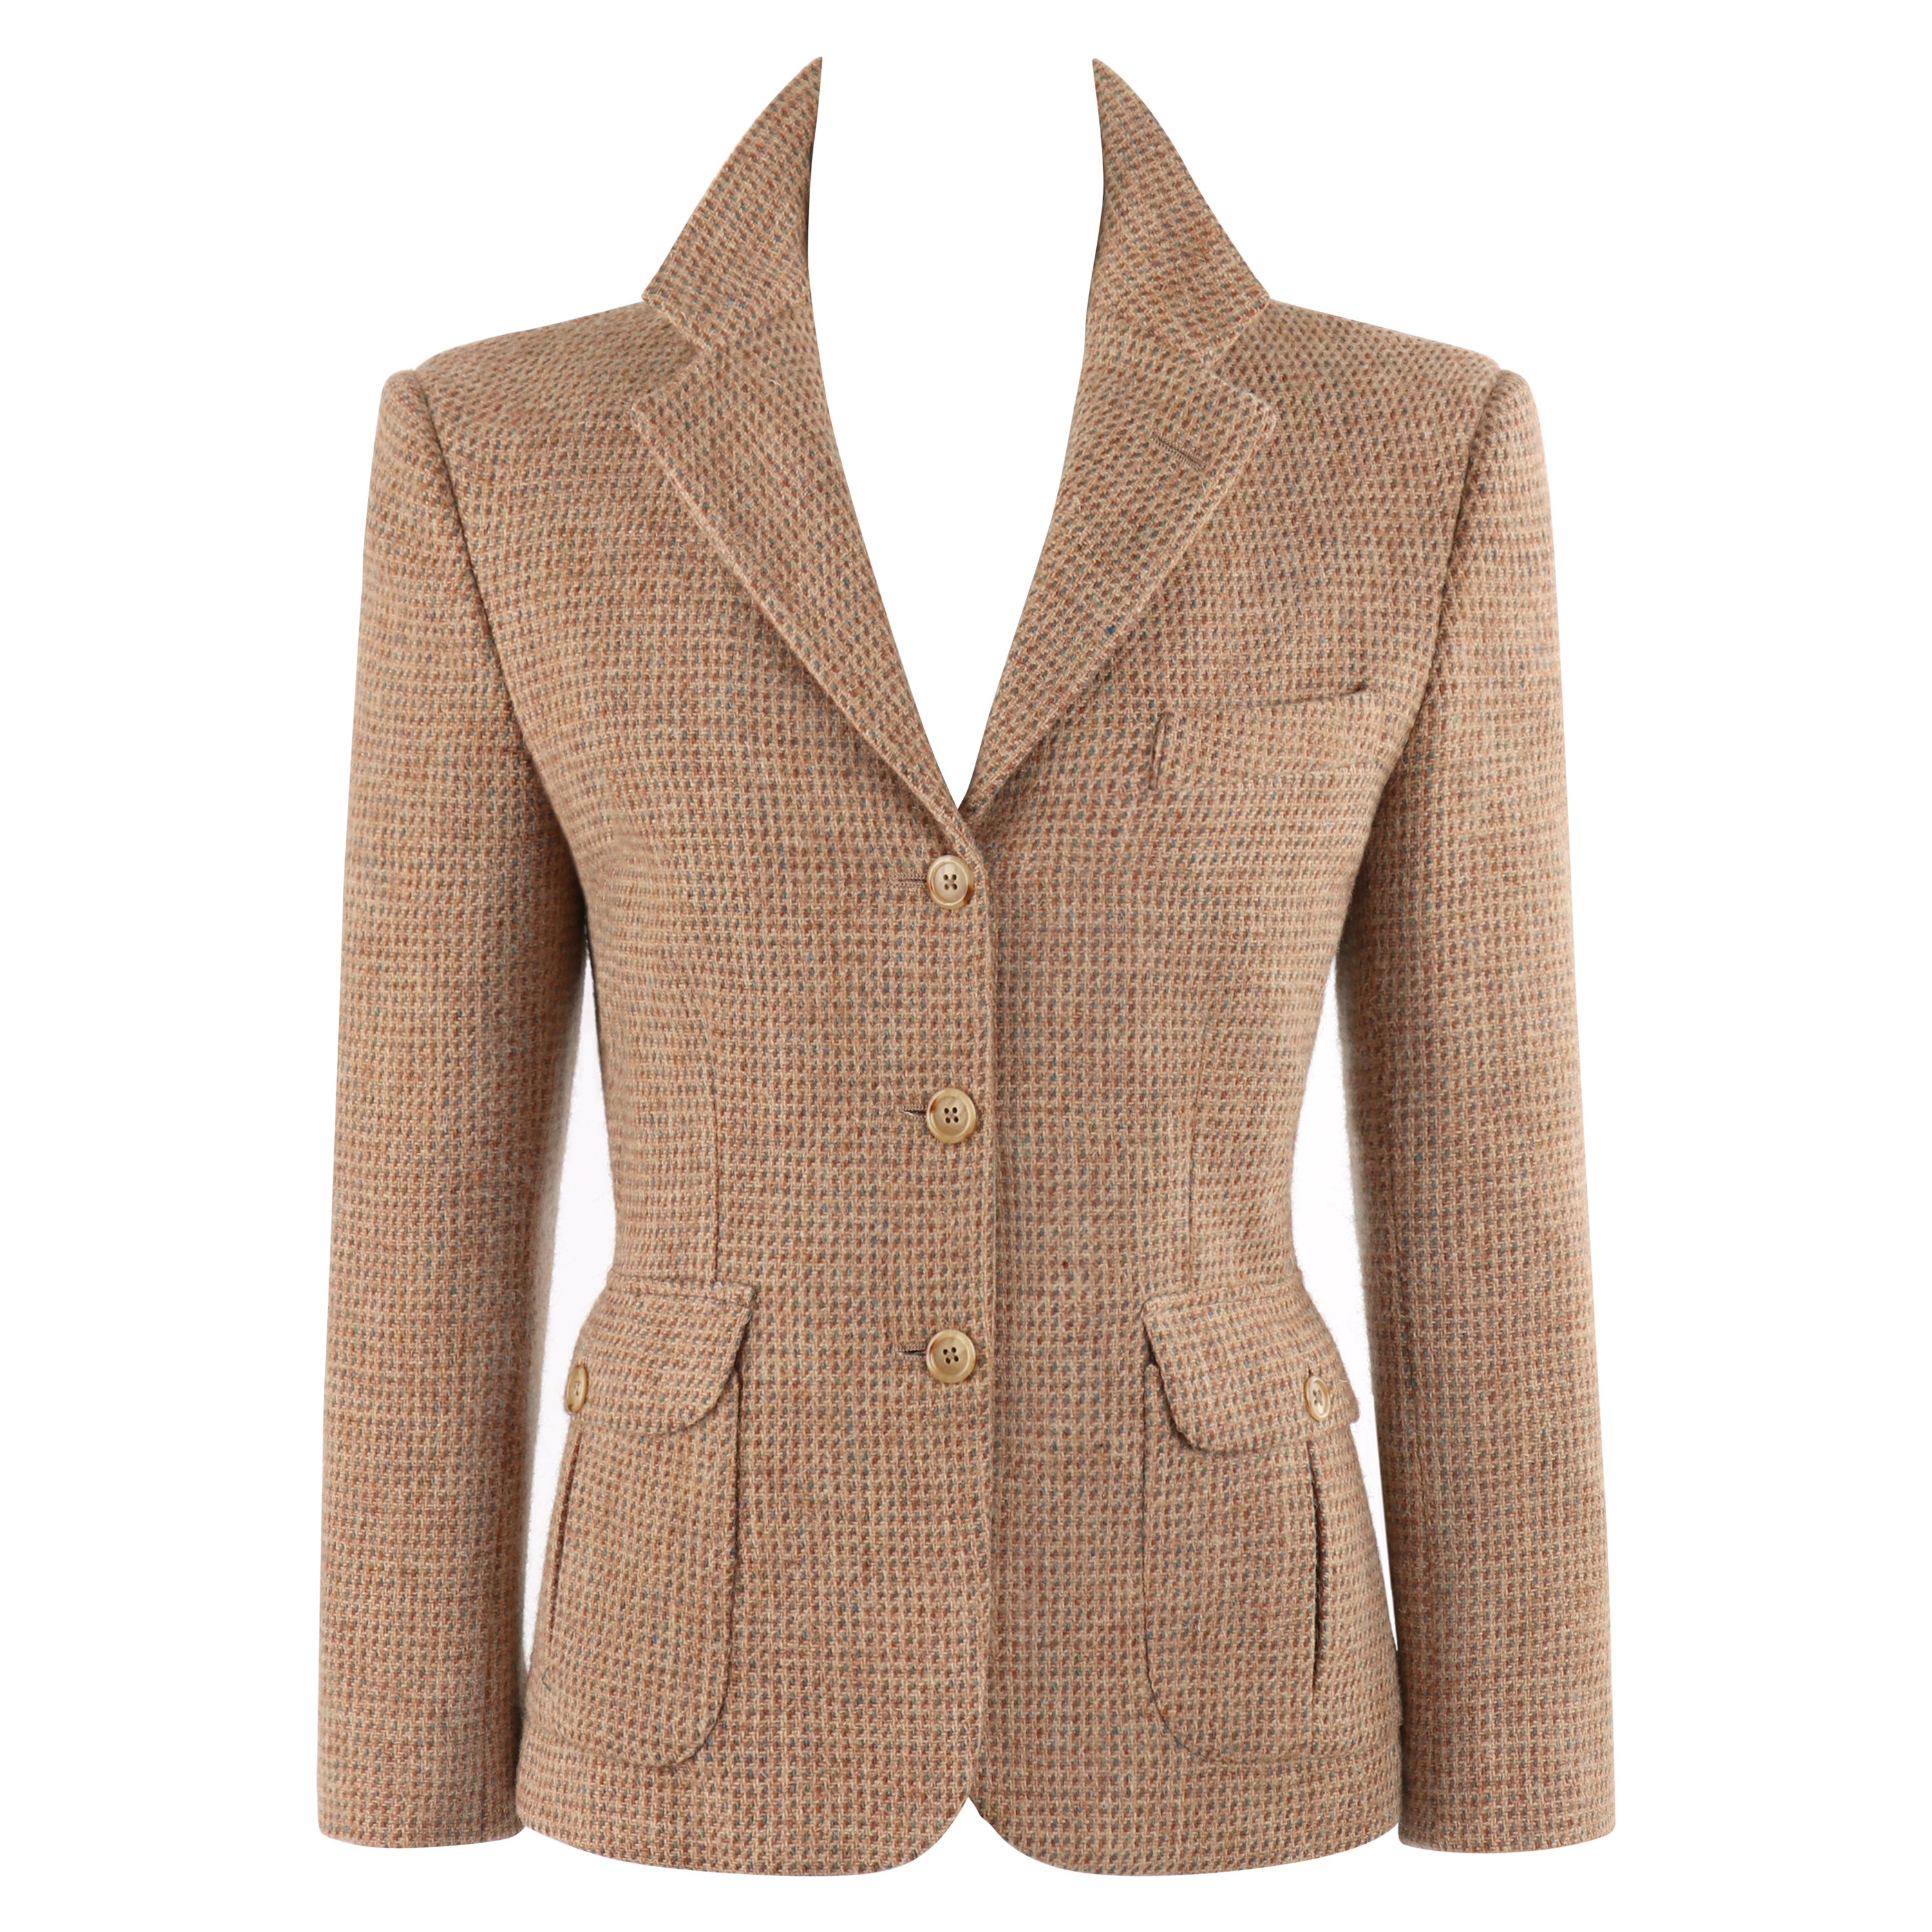 RALPH LAUREN c.1970's Brown Tan Tweed Wool Fitted Button Up Blazer Coat Jacket  For Sale